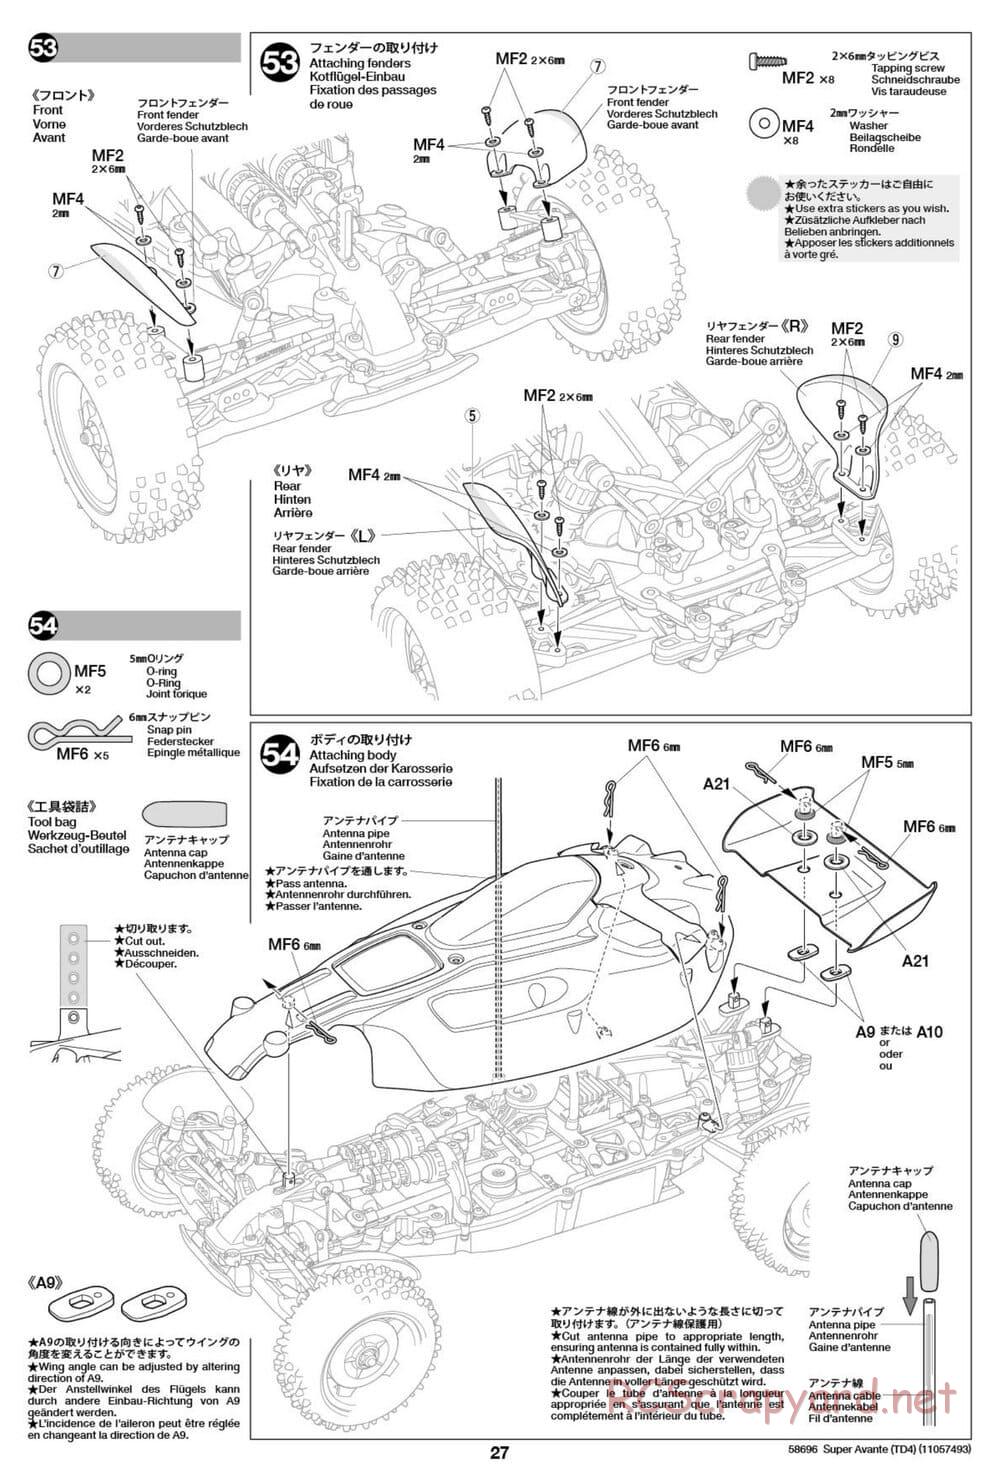 Tamiya - Super Avante - TD4 Chassis - Manual - Page 28